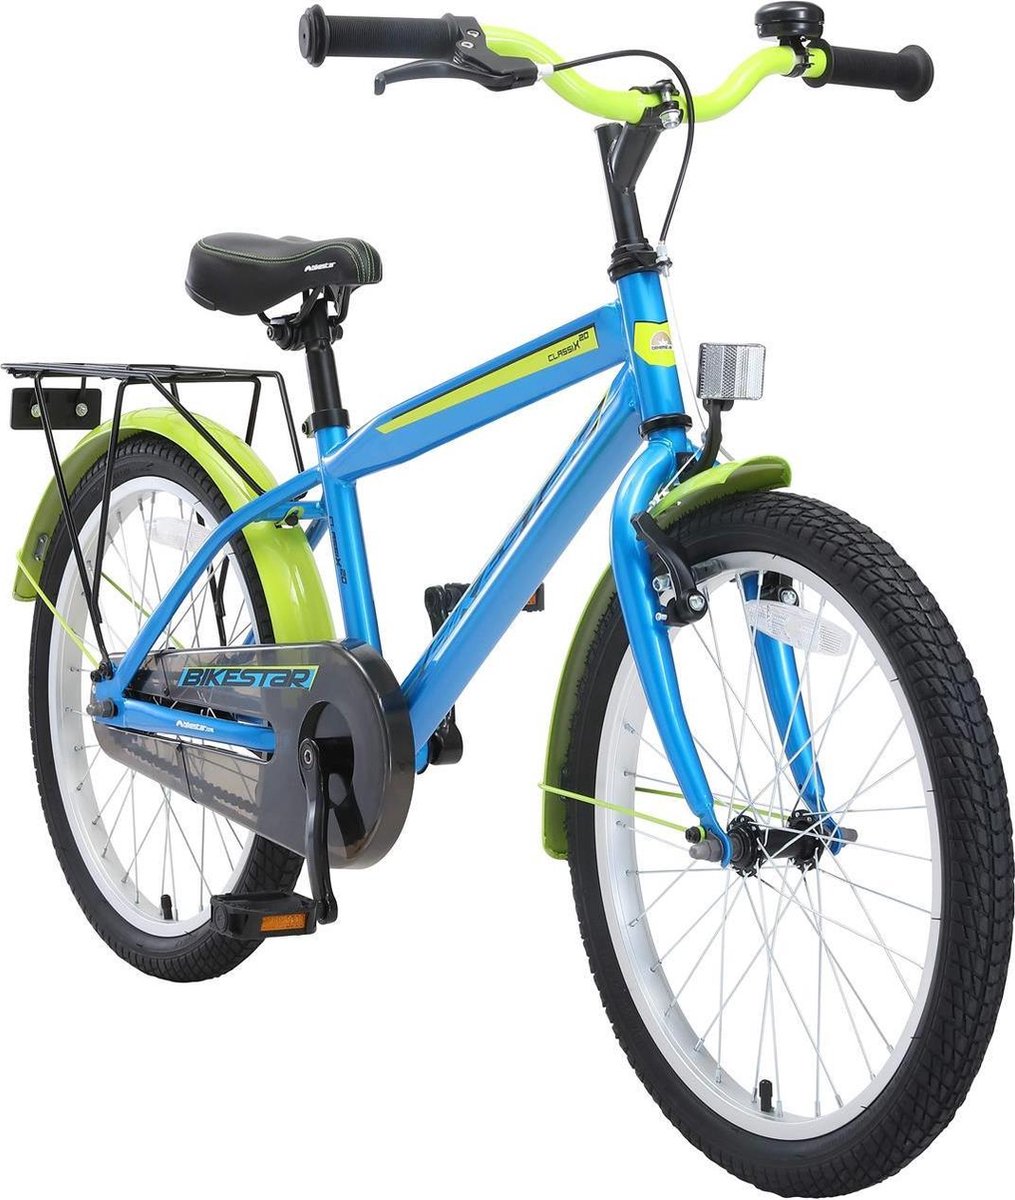 Bikestar 20 inch Urban City kinderfiets blauw groen